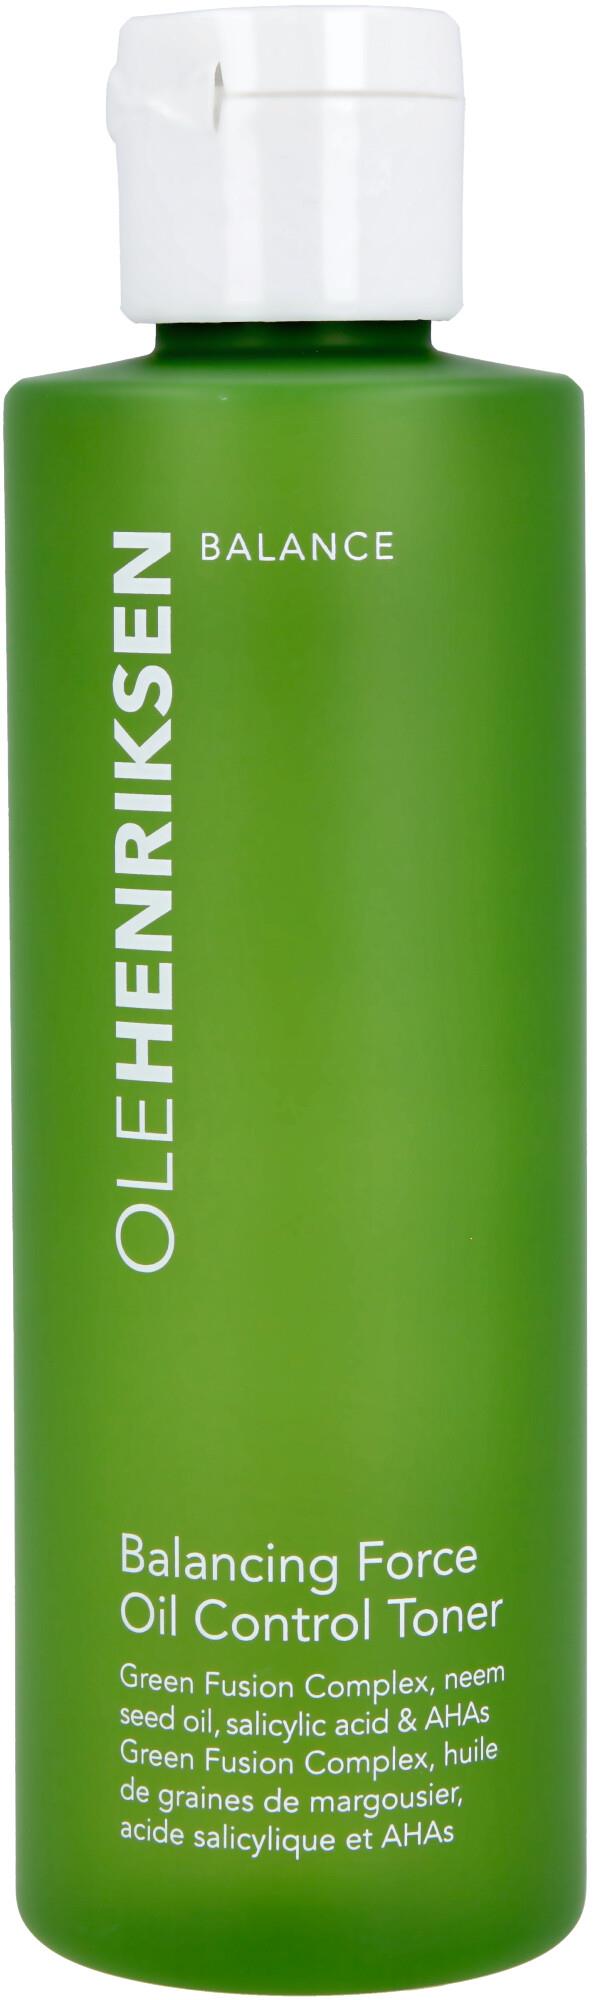 Ole Henriksen Balance Balancing Force Oil Control Toner 190 | lyko.com